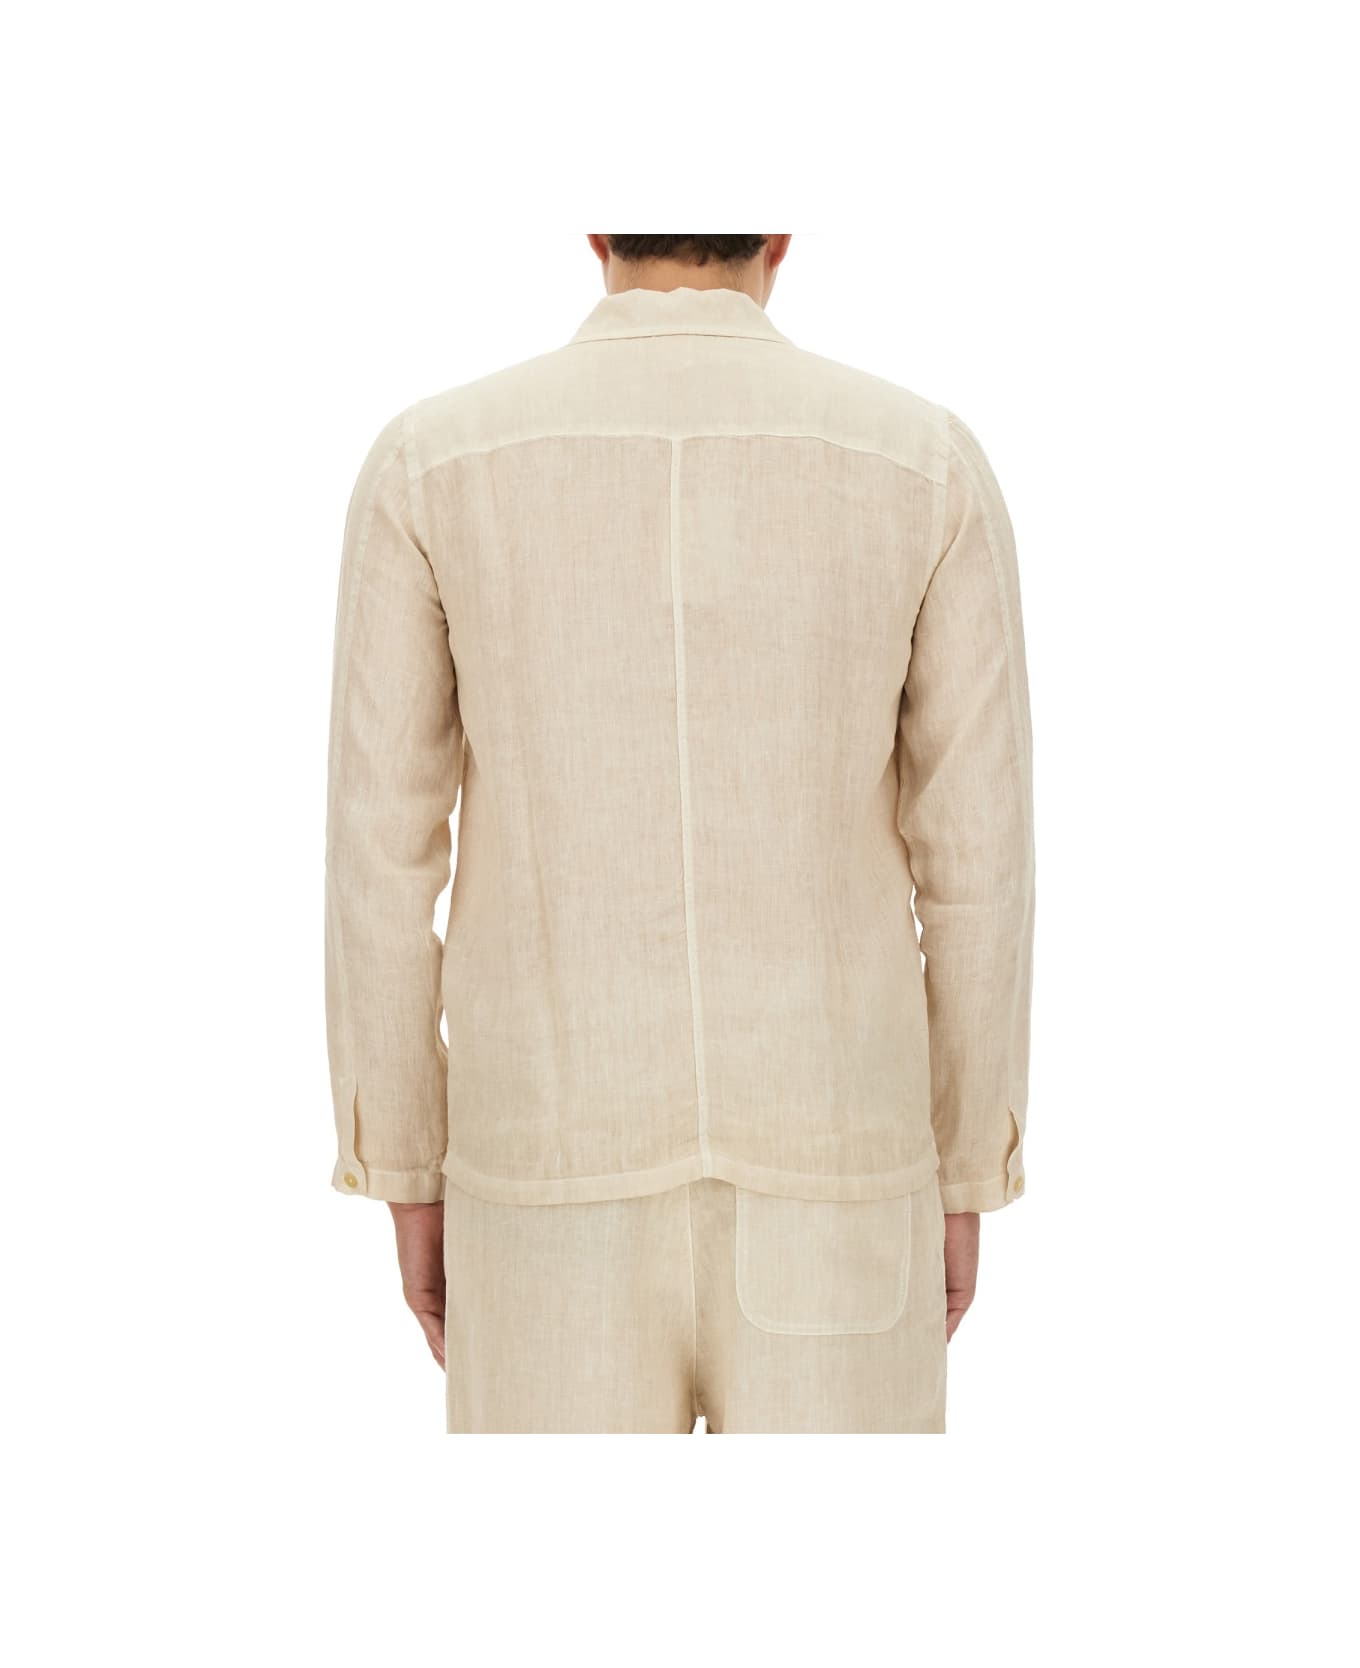 120% Lino Linen Shirt - Safari soft fade シャツ